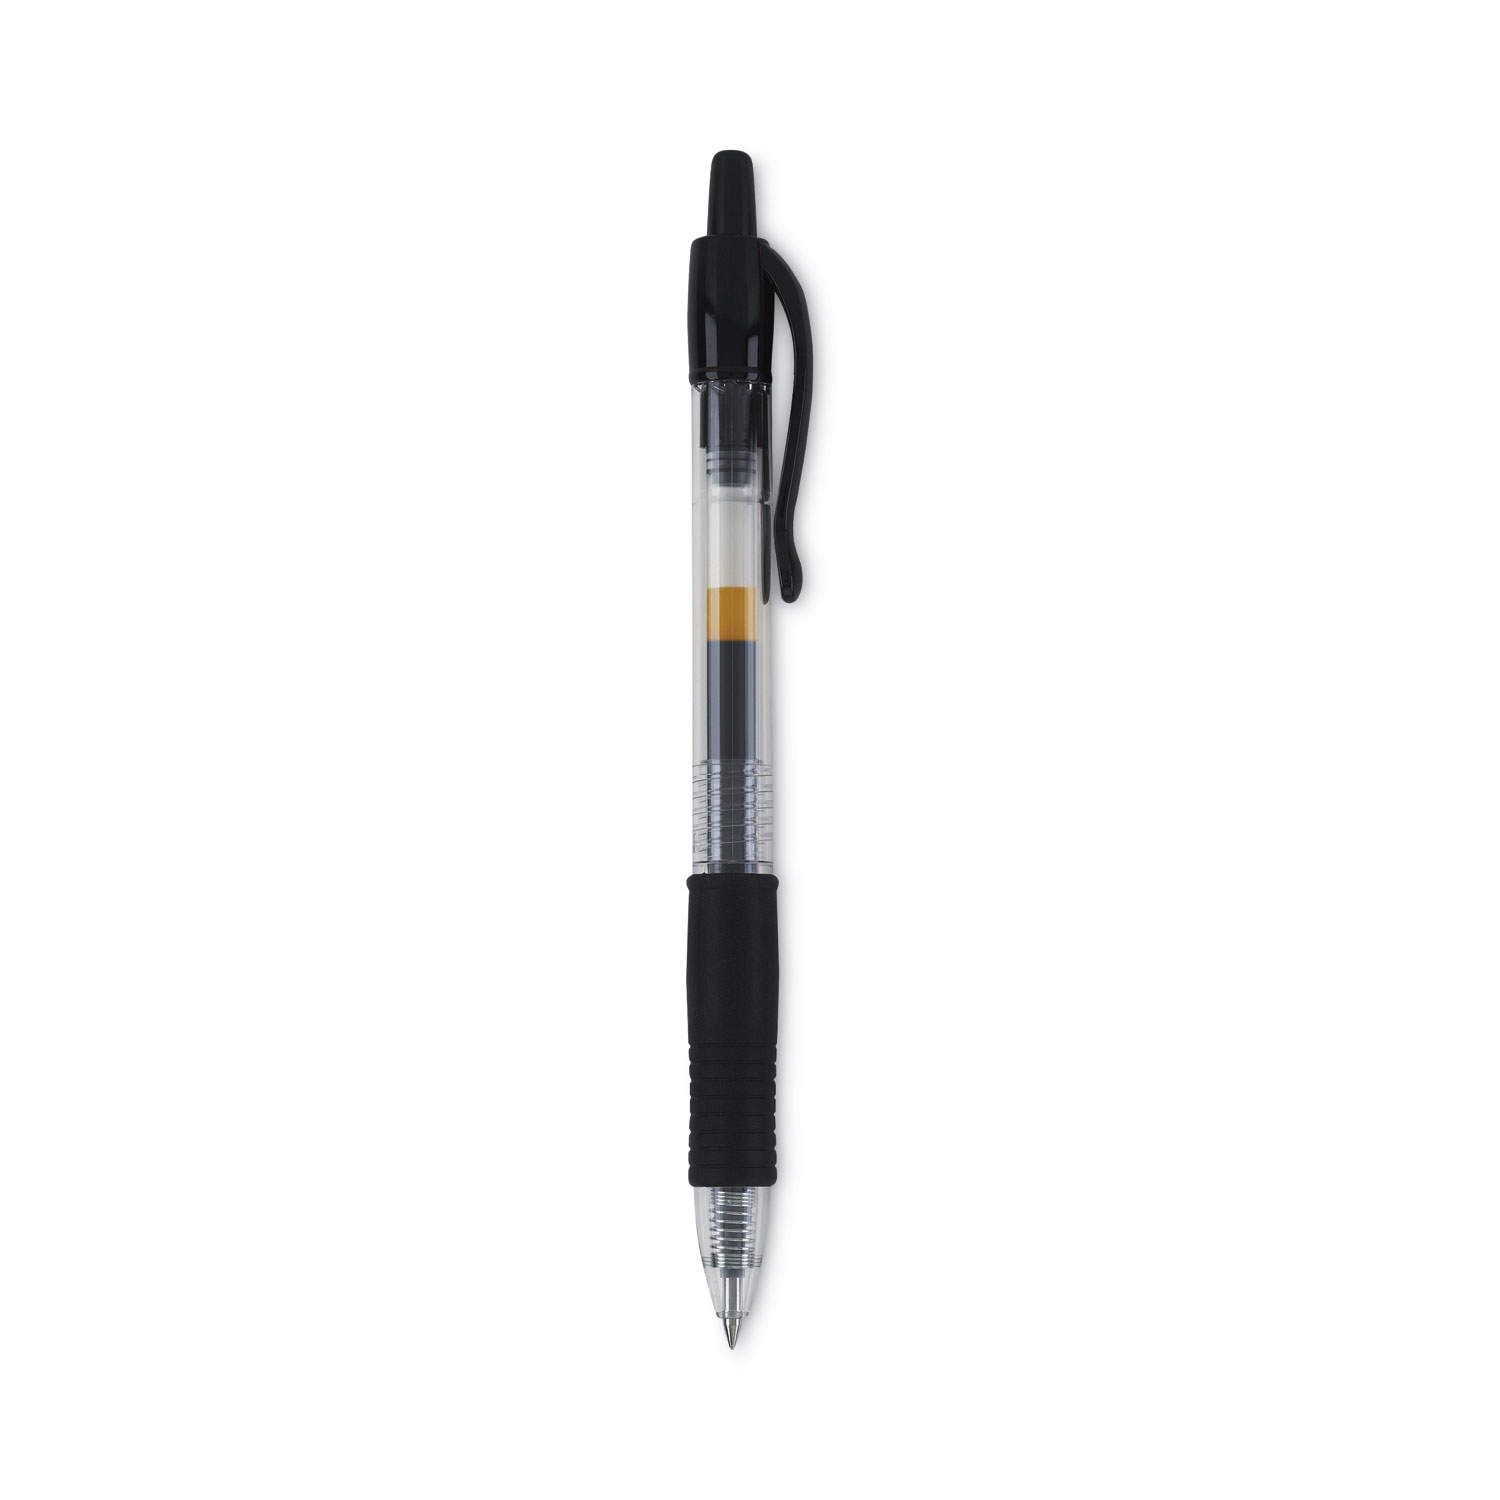 G2 Premium Gel Pen, Retractable, Fine 0.7 mm, Red Ink, Smoke/ Red